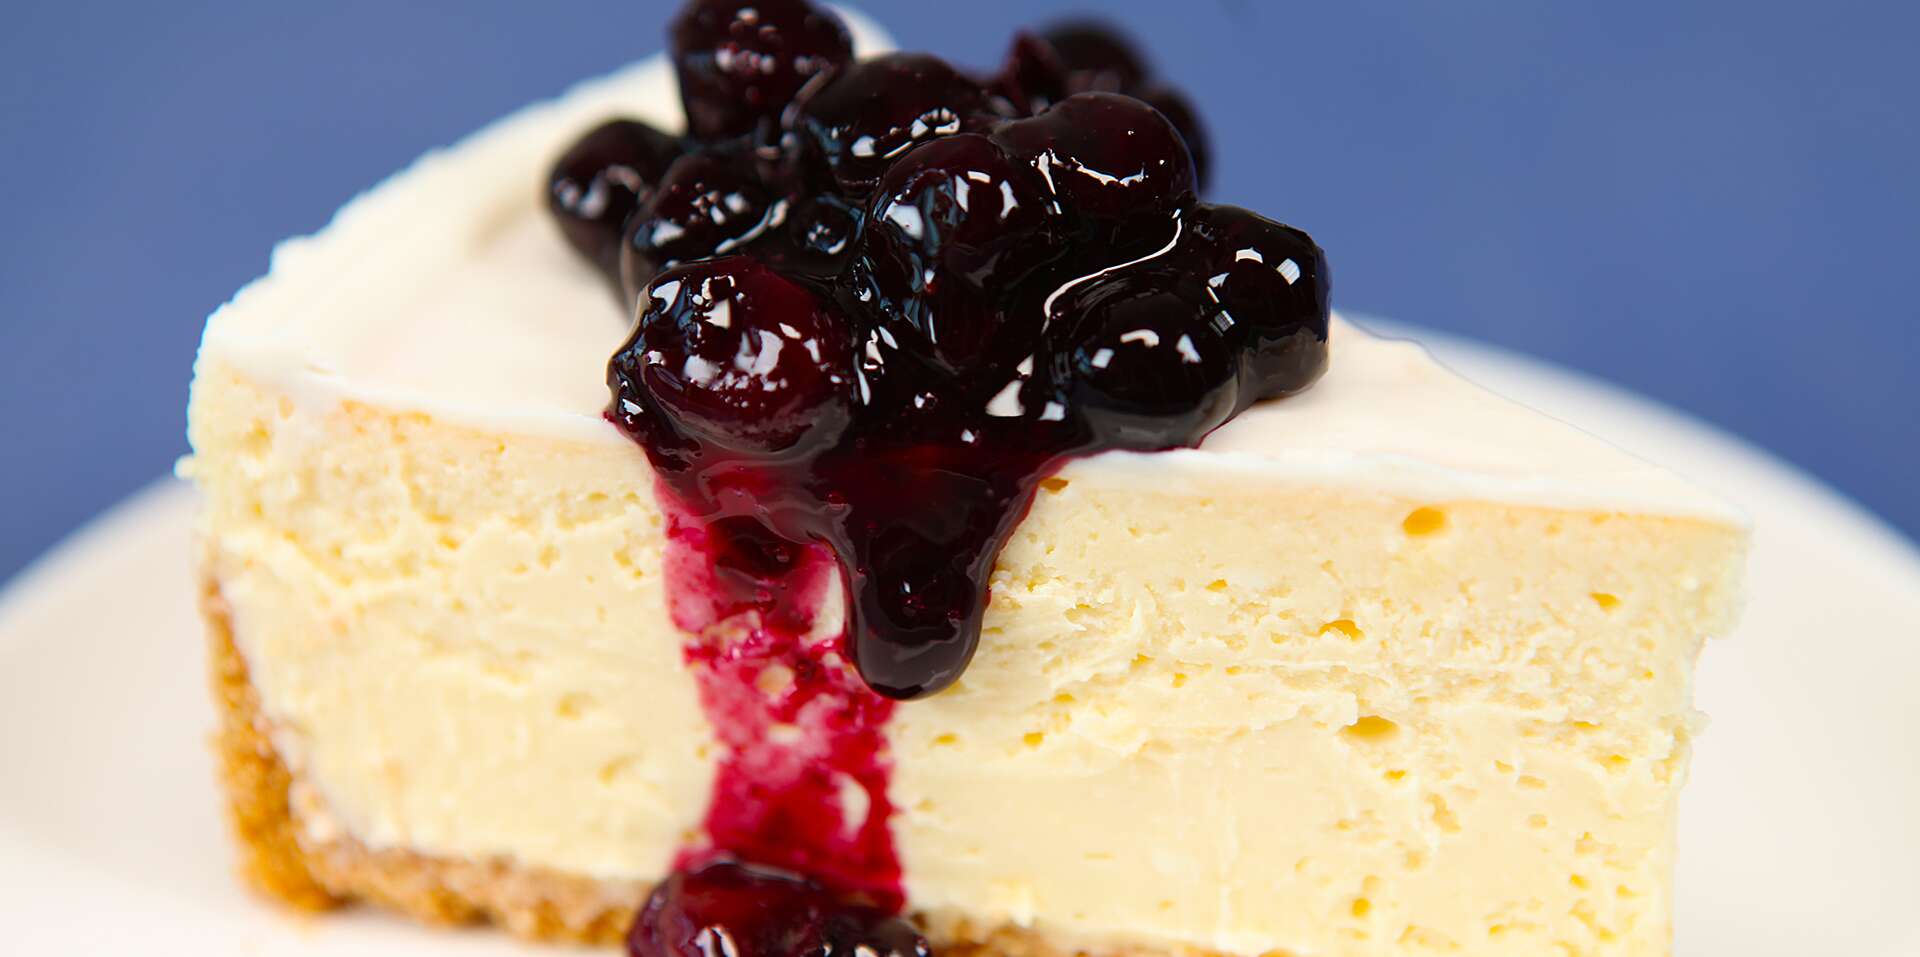 Cheesecake Recipe - Make the creamiest cheesecake ever! - VIDEO